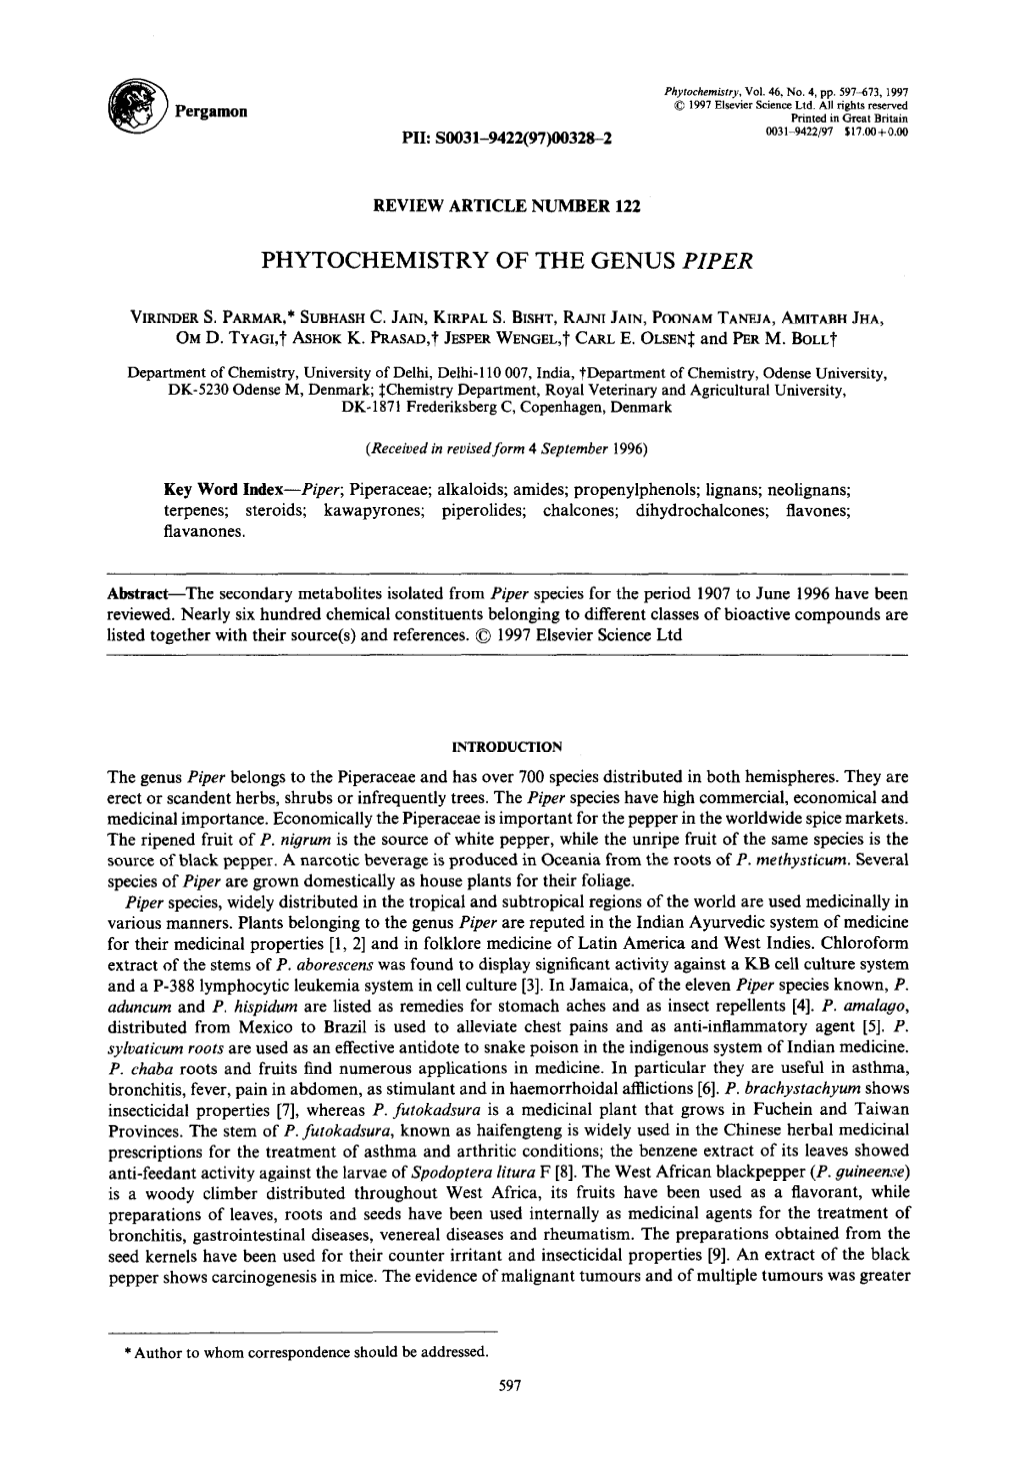 Phytochemistry of the Genus Piper